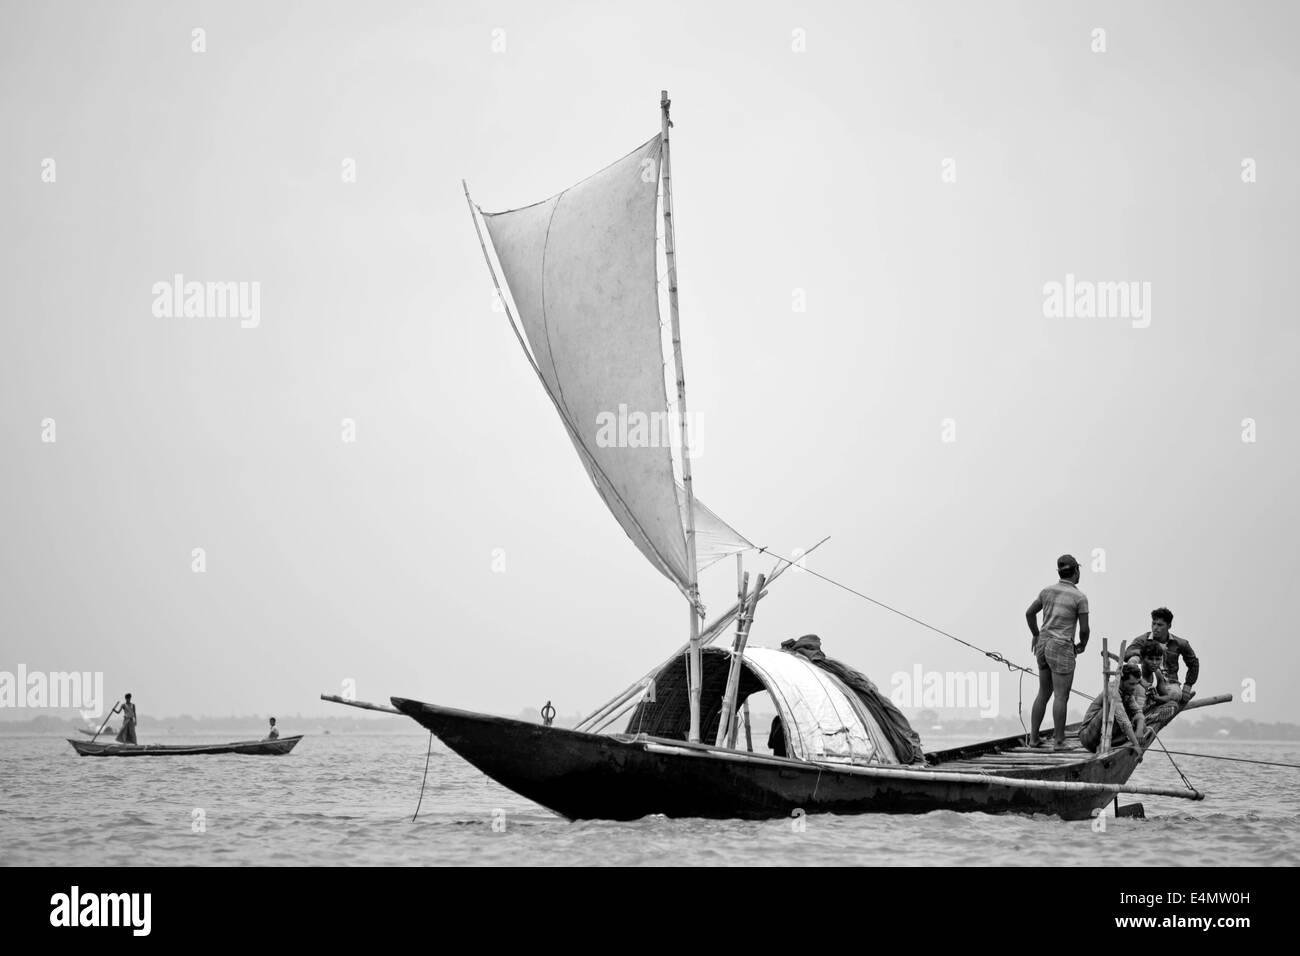 sail boat in Bangladesh,boat,bangladesh,sail,with,people,river,in ...